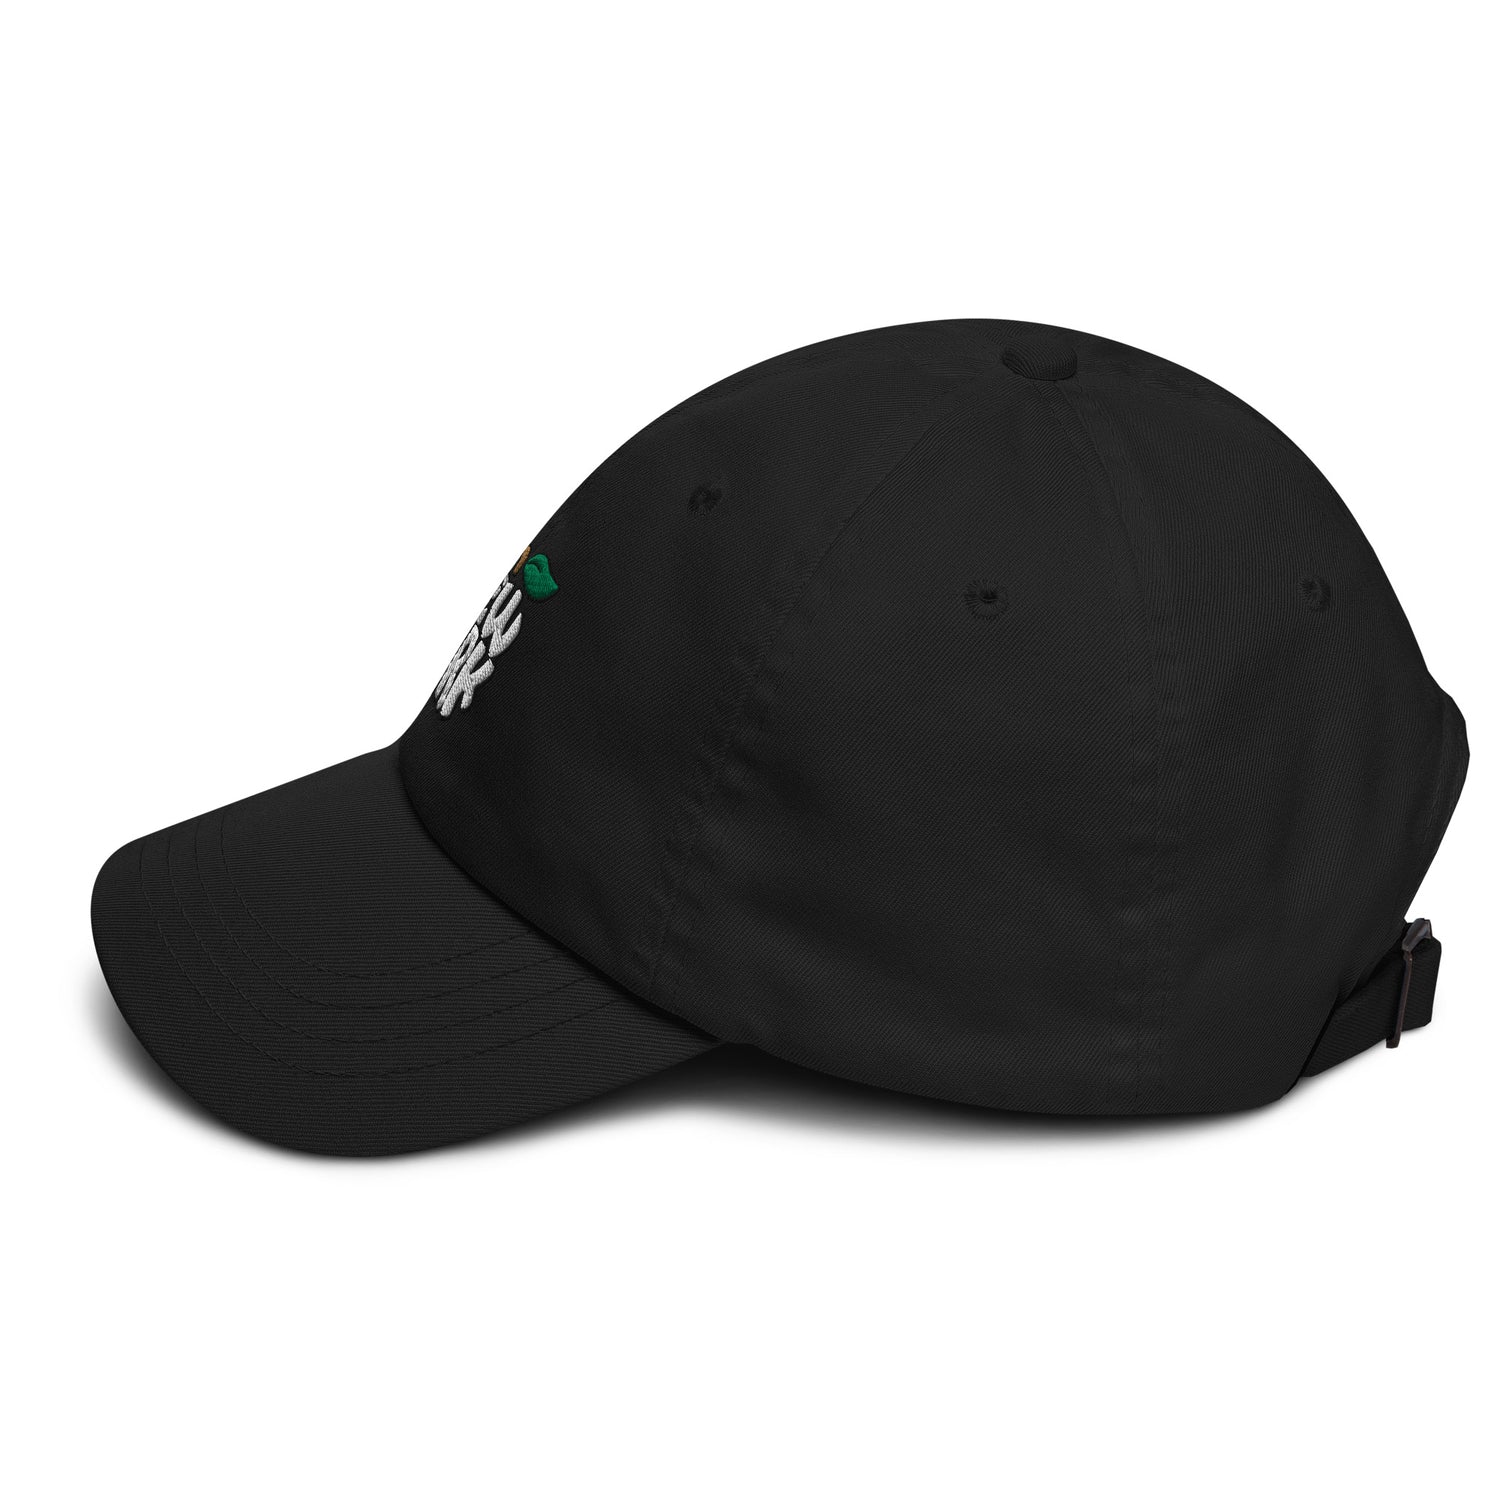 New York Apple Logo Embroidered Black Dad Hat Scattered Streetwear